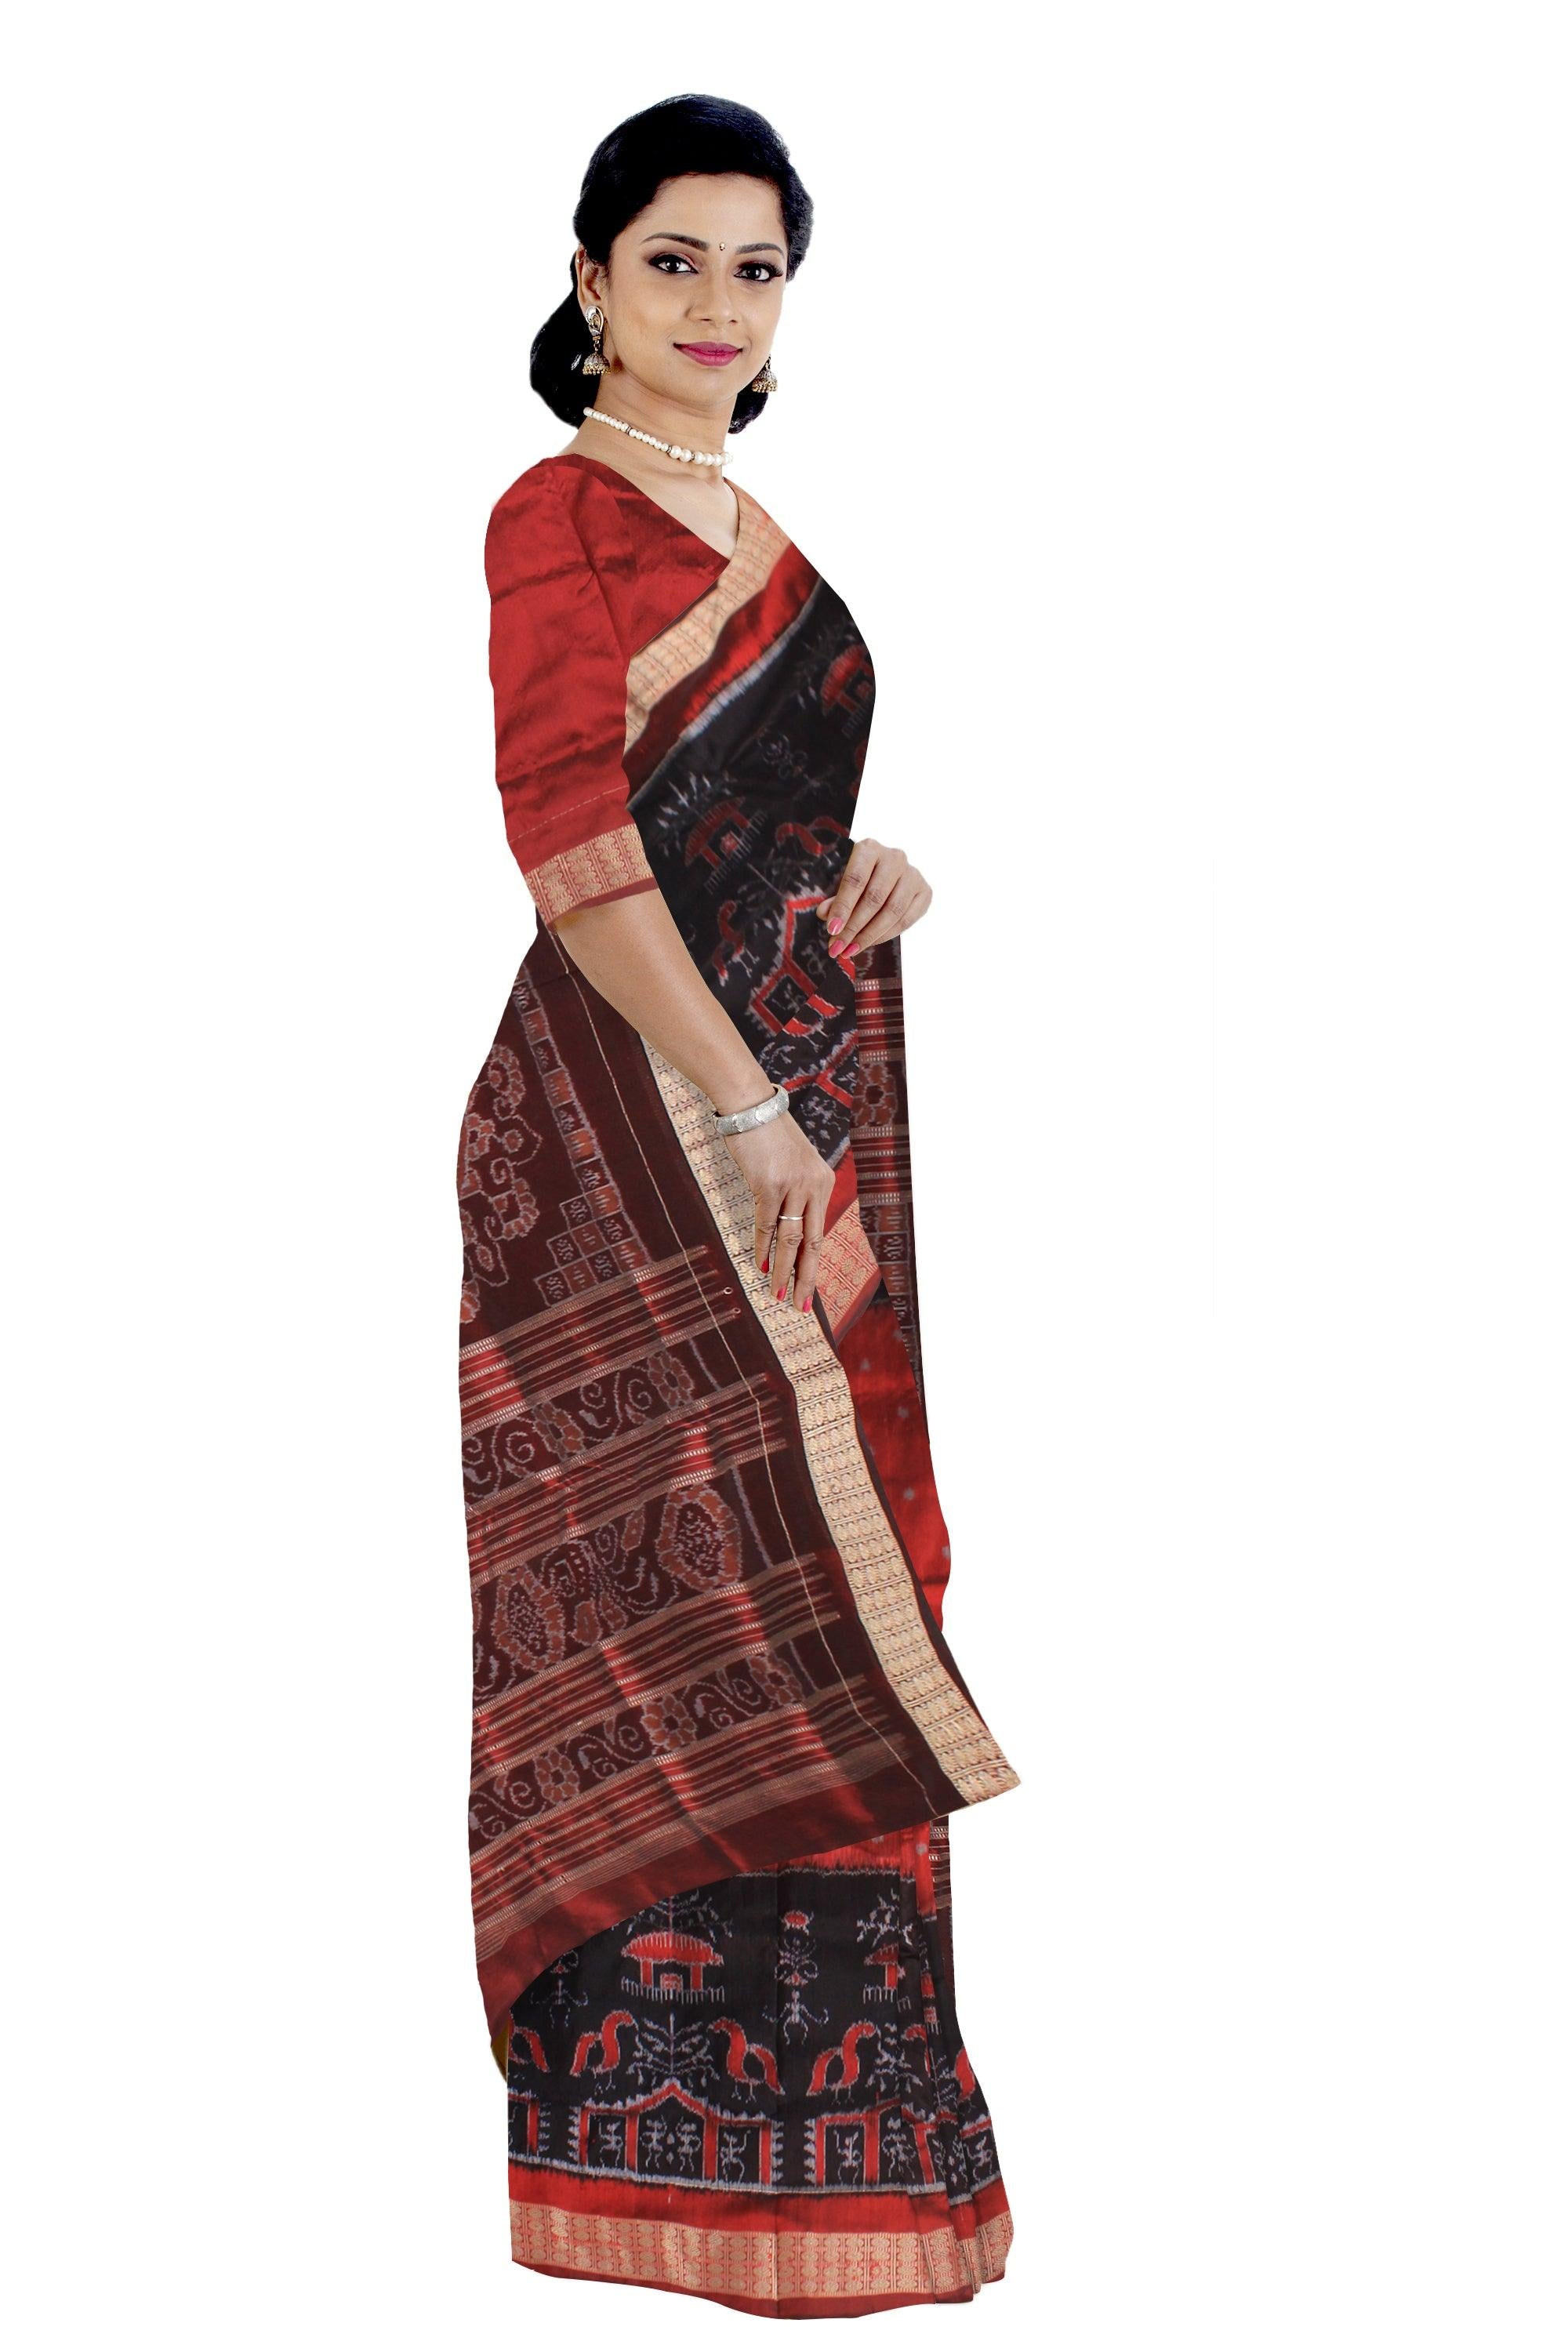 Sambalpuri Pata Saree in Maroon and Black  Color in small house design with blouse piece. - Koshali Arts & Crafts Enterprise